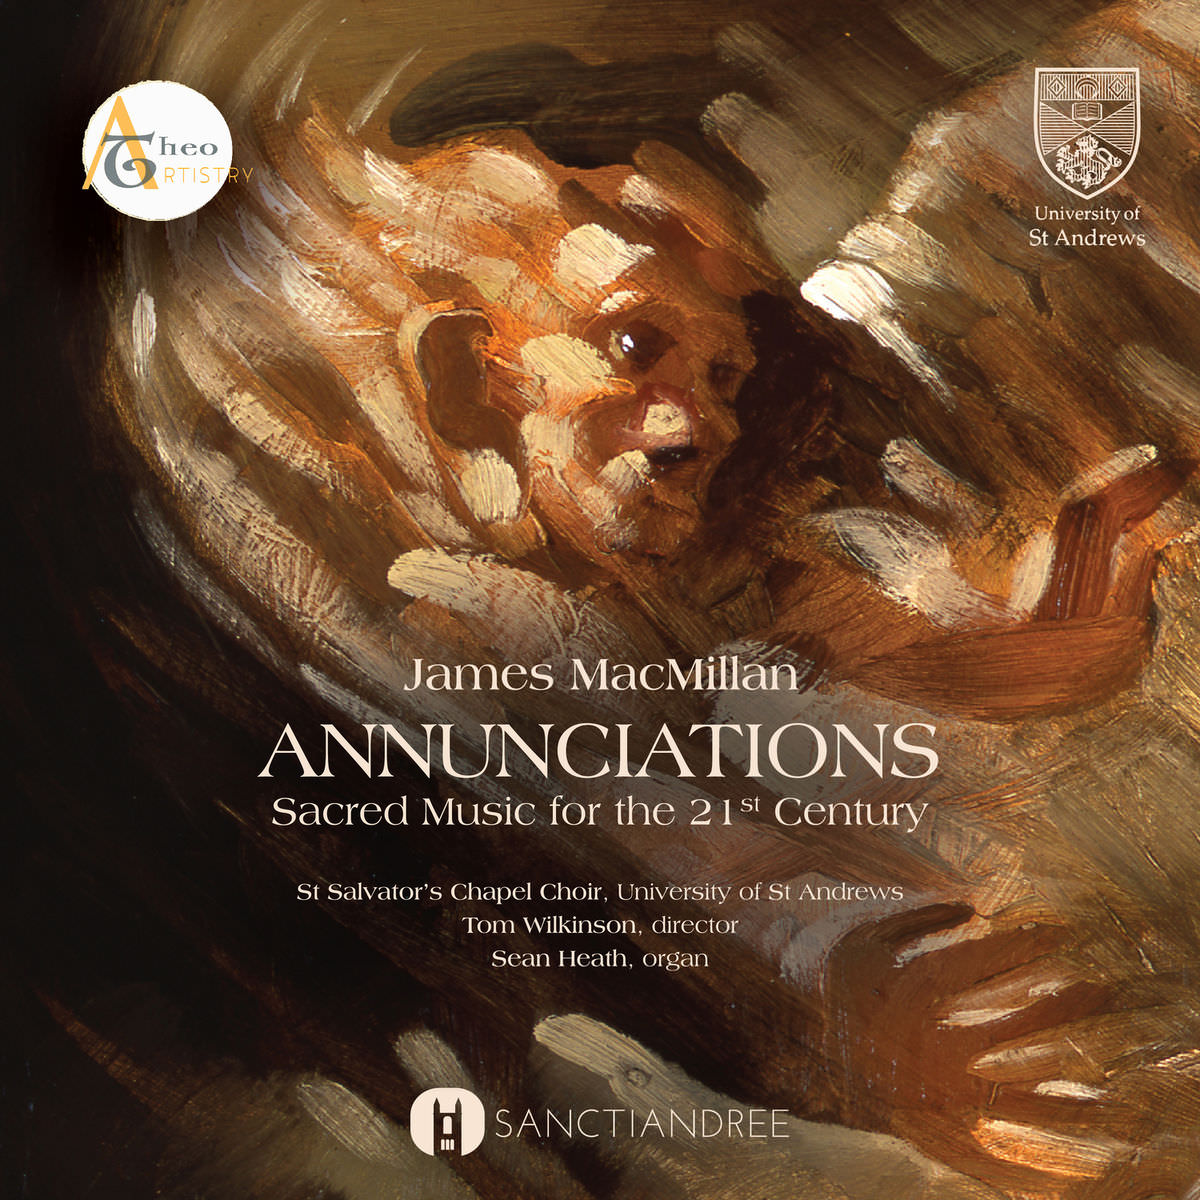 St. Salvator’s Chapel Choir & Tom Wilkinson - Annunciations (2018) [FLAC 24bit/96kHz]